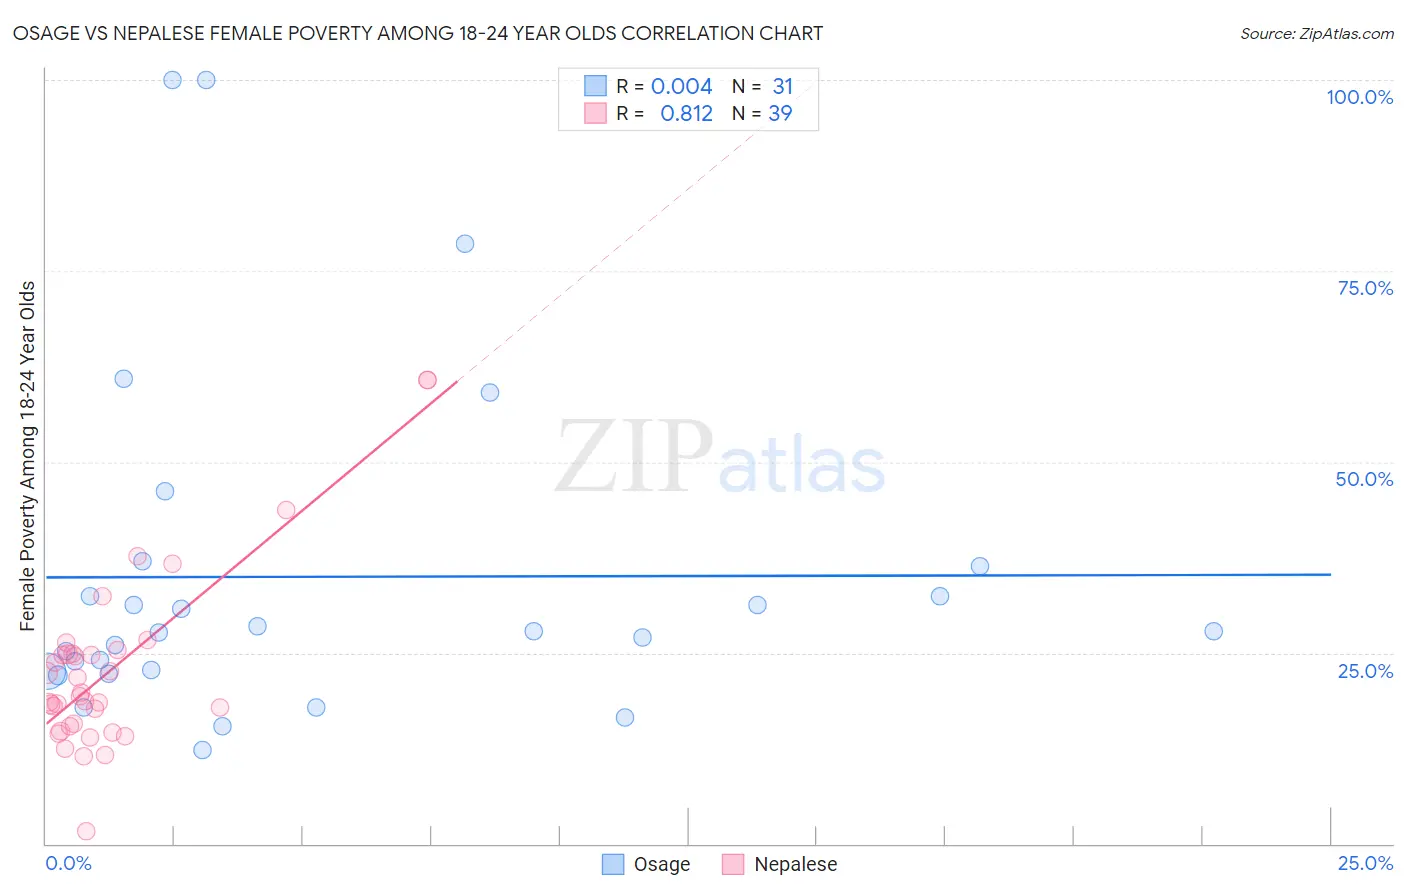 Osage vs Nepalese Female Poverty Among 18-24 Year Olds